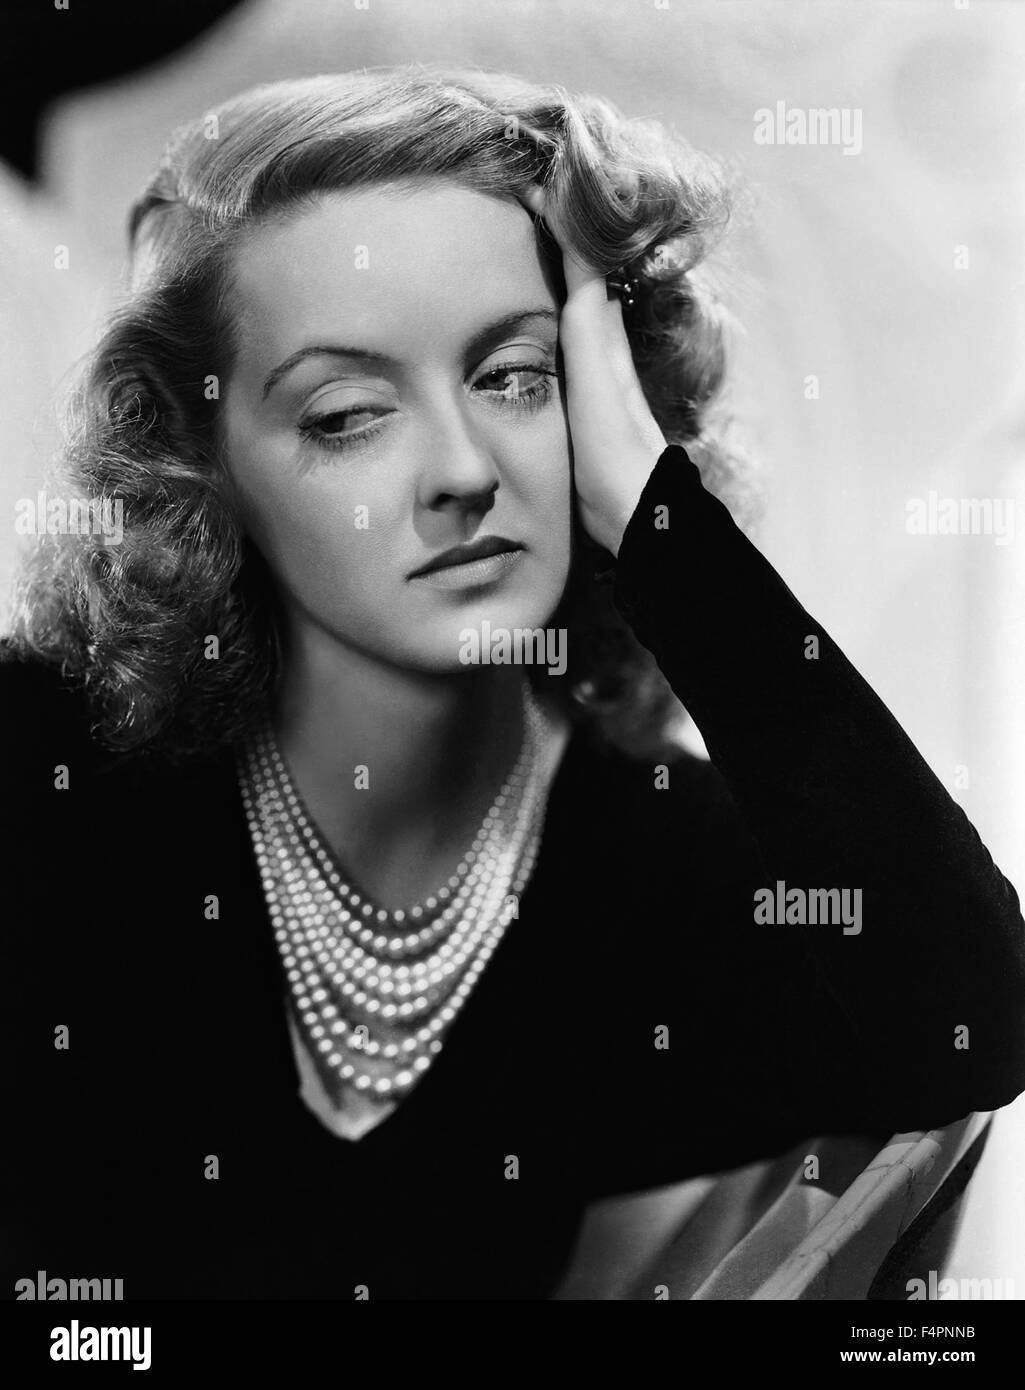 Bette Davis in the 30's. Stock Photo